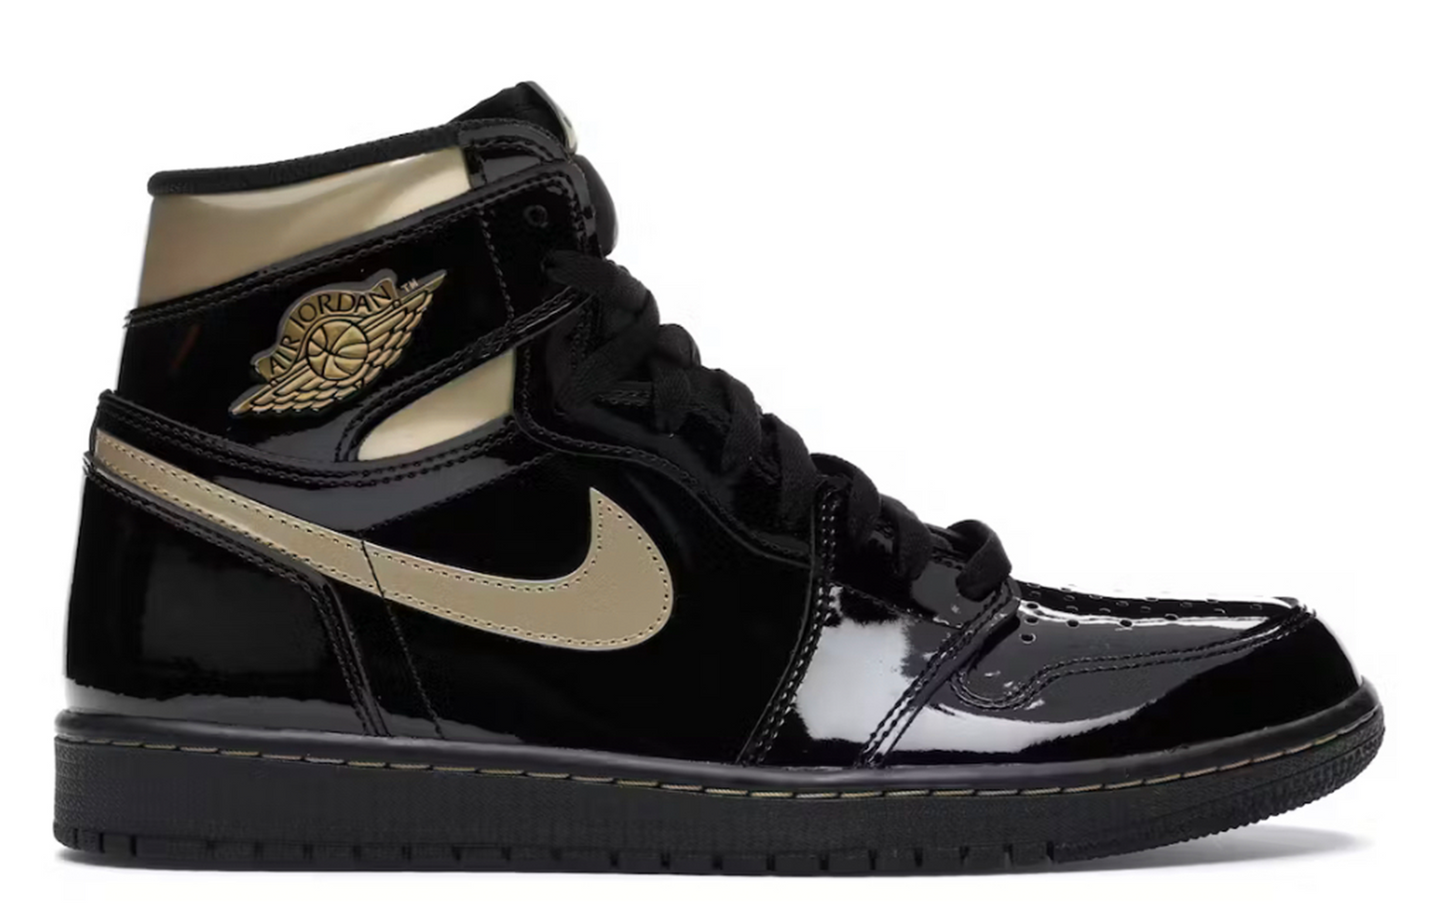 Nike Jordan 1 Retro High Black Goldmetallic (2020)